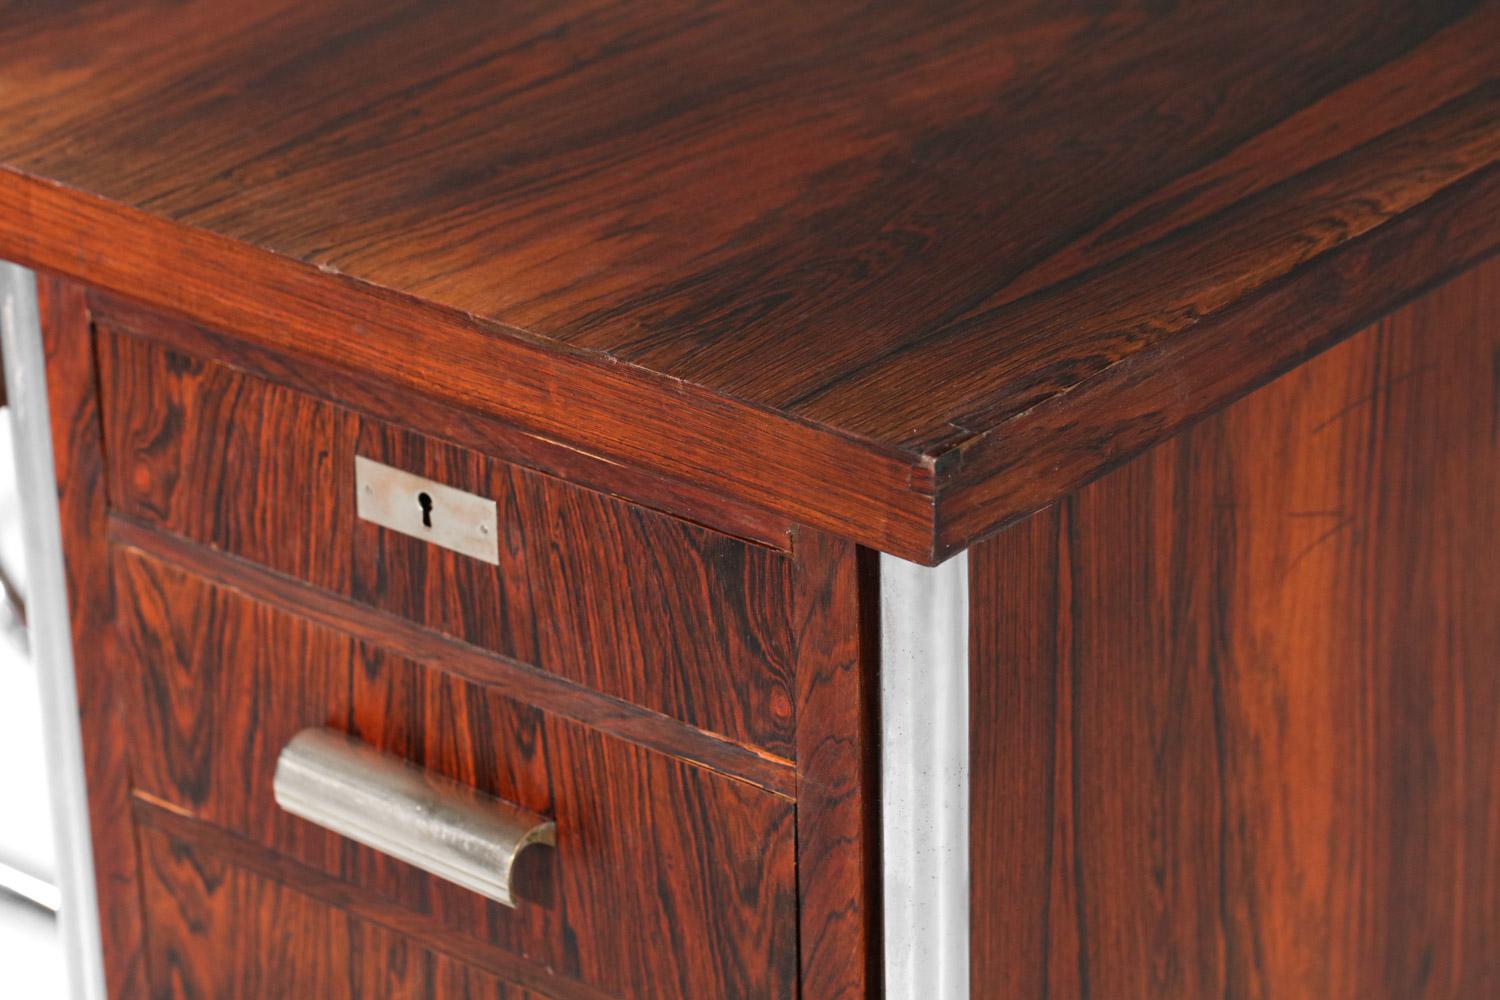 Modernist Desk in Solid Wood 40s / 50s Bauhaus Style Vintage For Sale 2